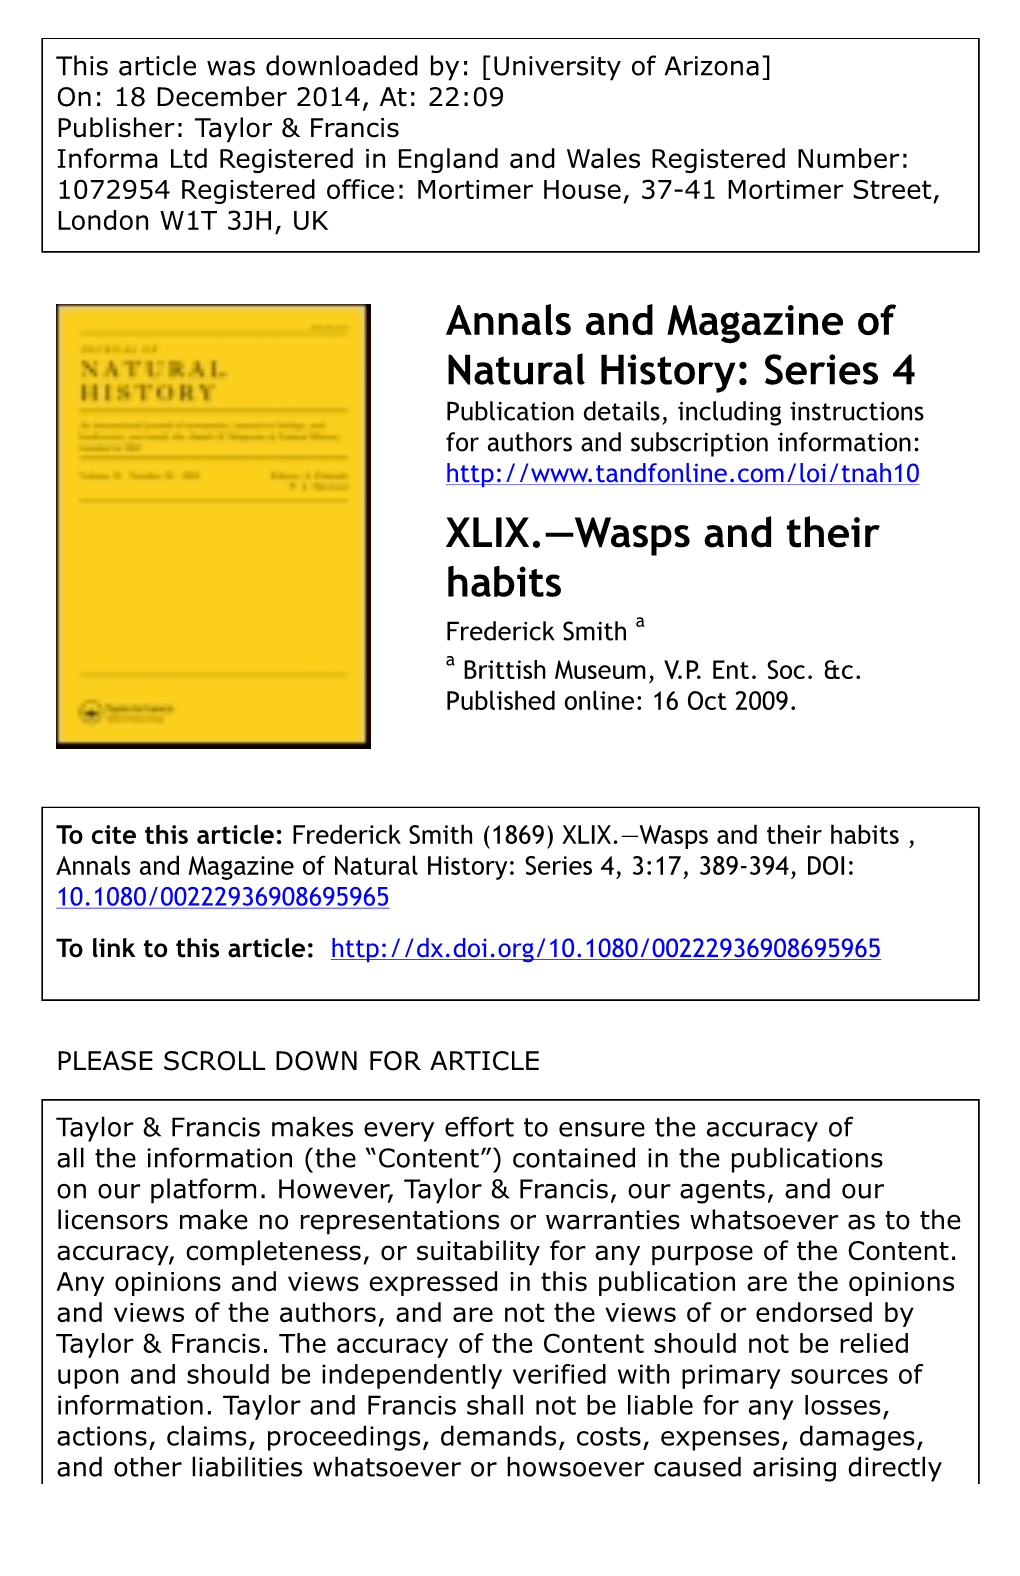 Annals and Magazine of Natural History: Series 4 XLIX